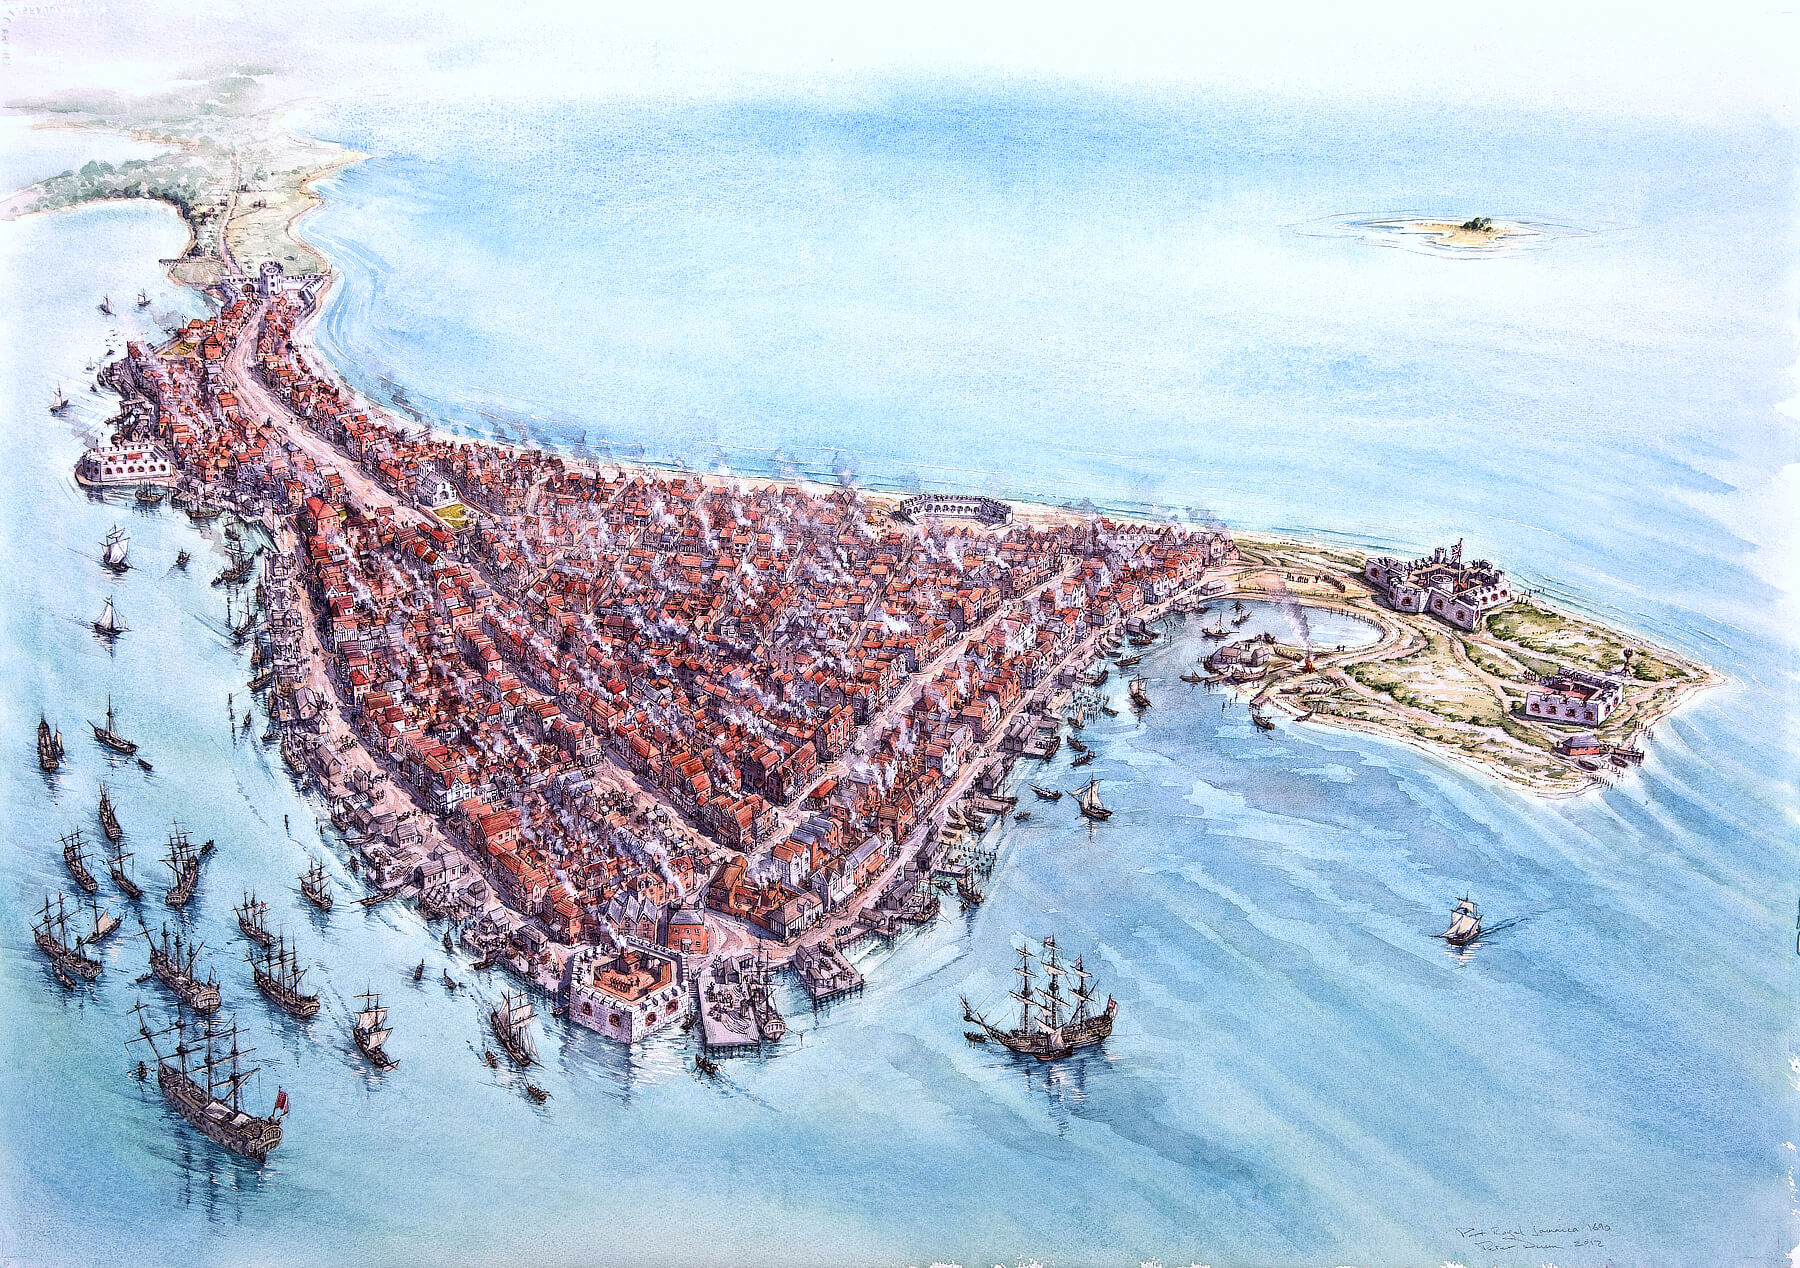 Port Royal circa 1690 prior to the 1692 Earthquake